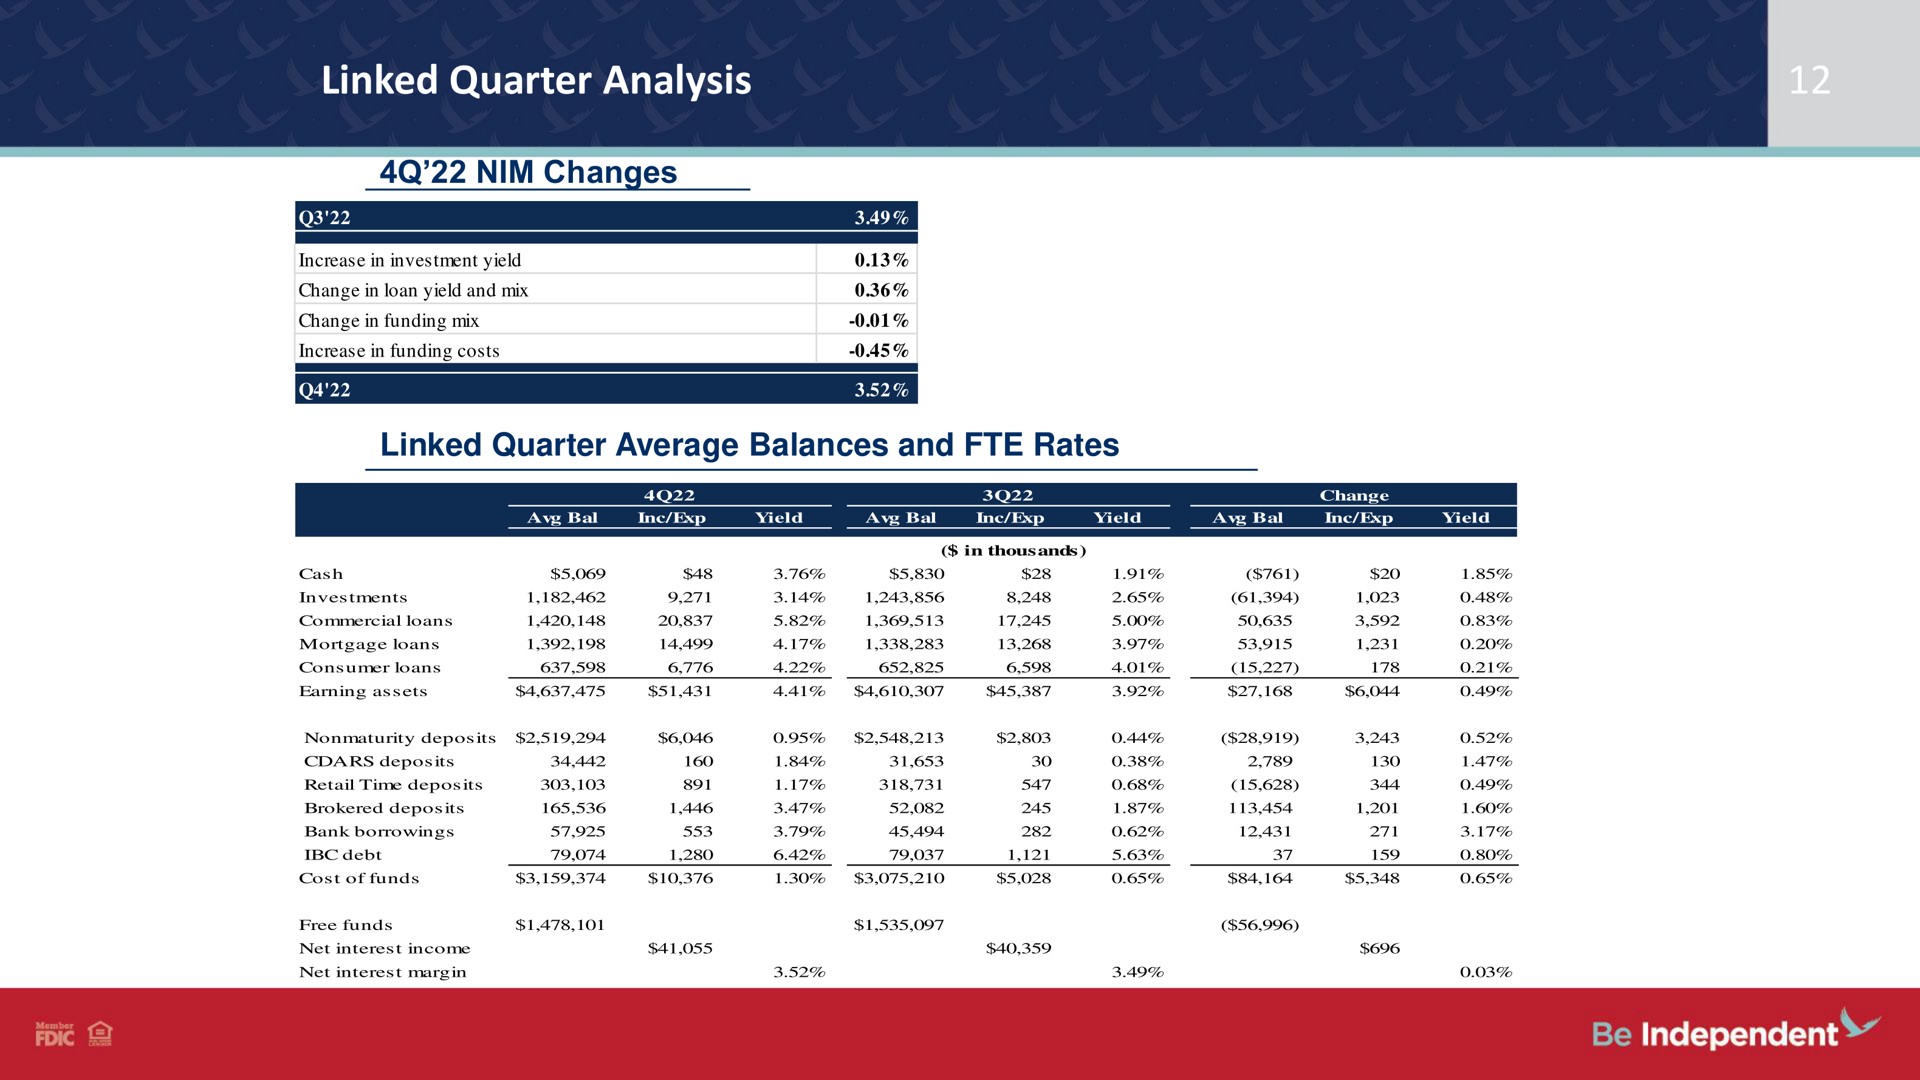 linked quarter analysis average balances and rates | Independent Bank Corp